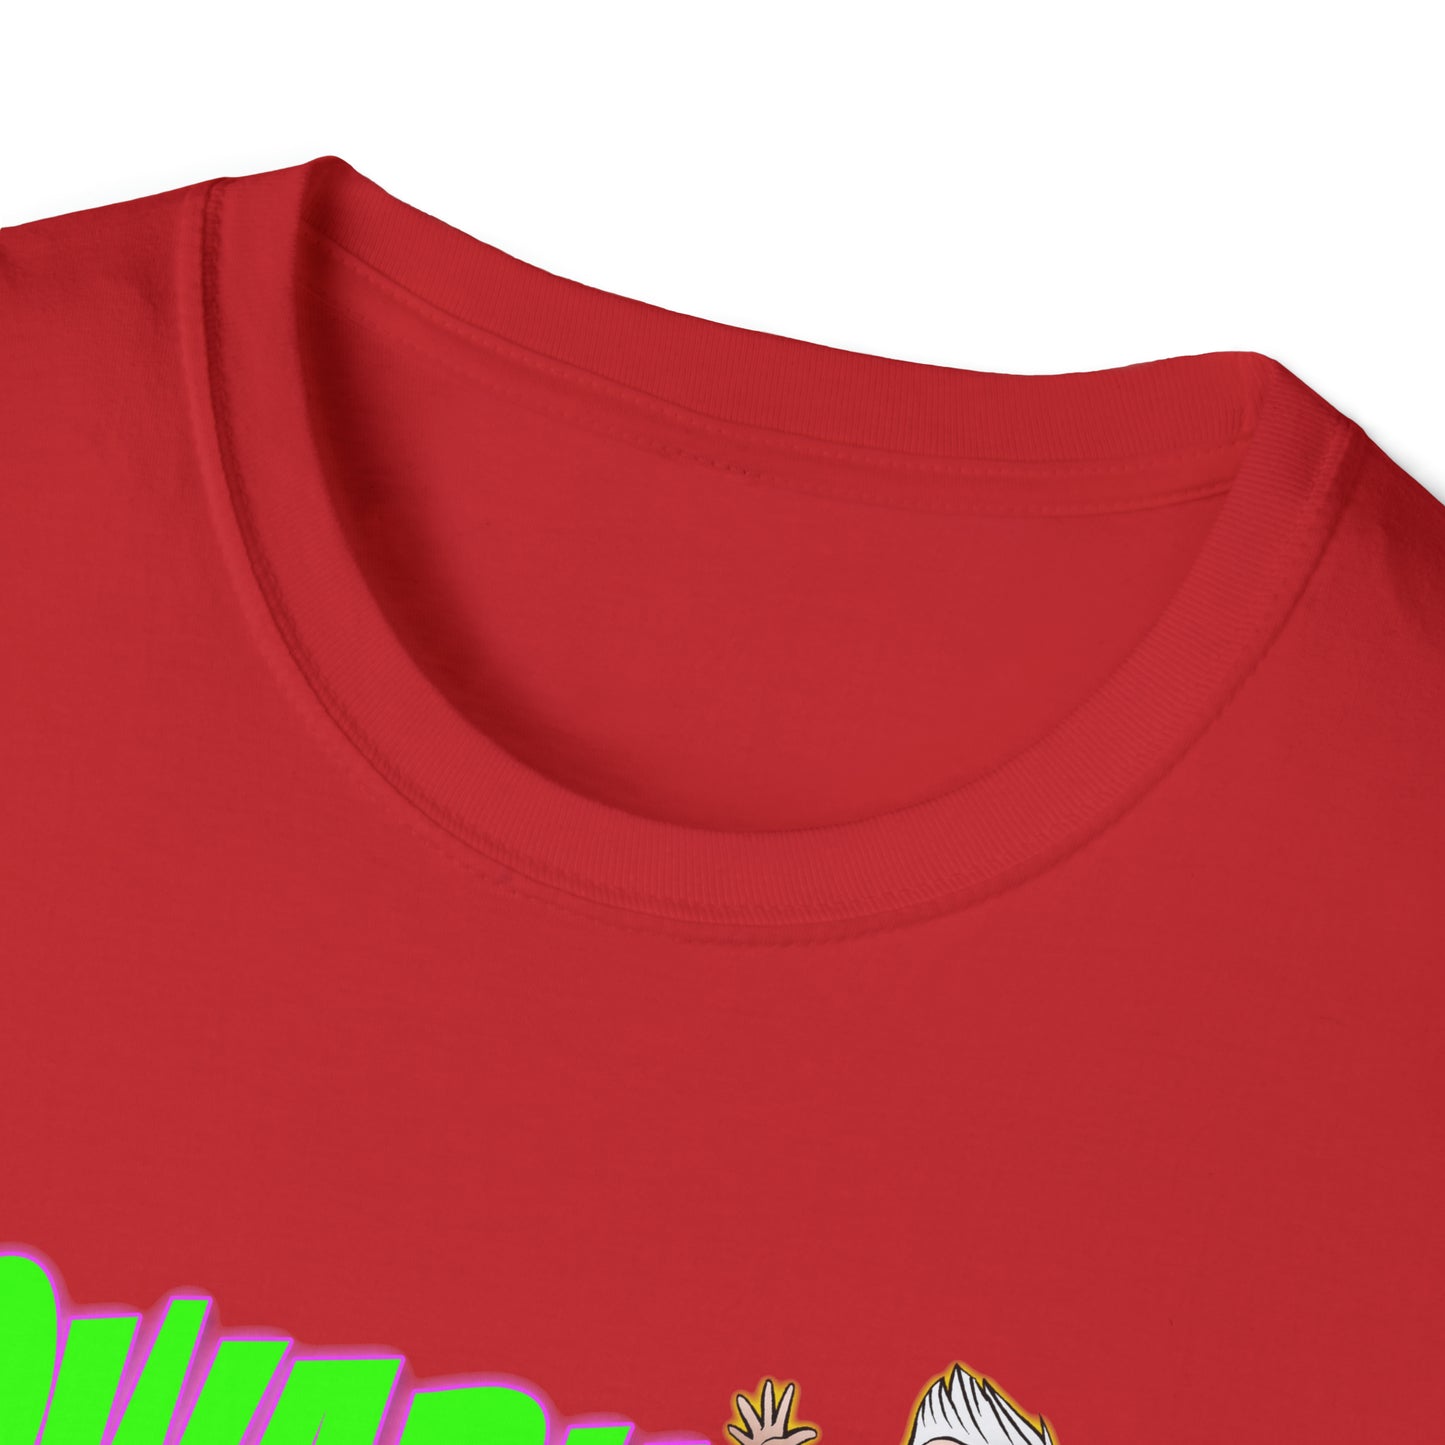 Rob Paulsen COWABUNGA T-Shirt (Unisex Softstyle) 6 Colors